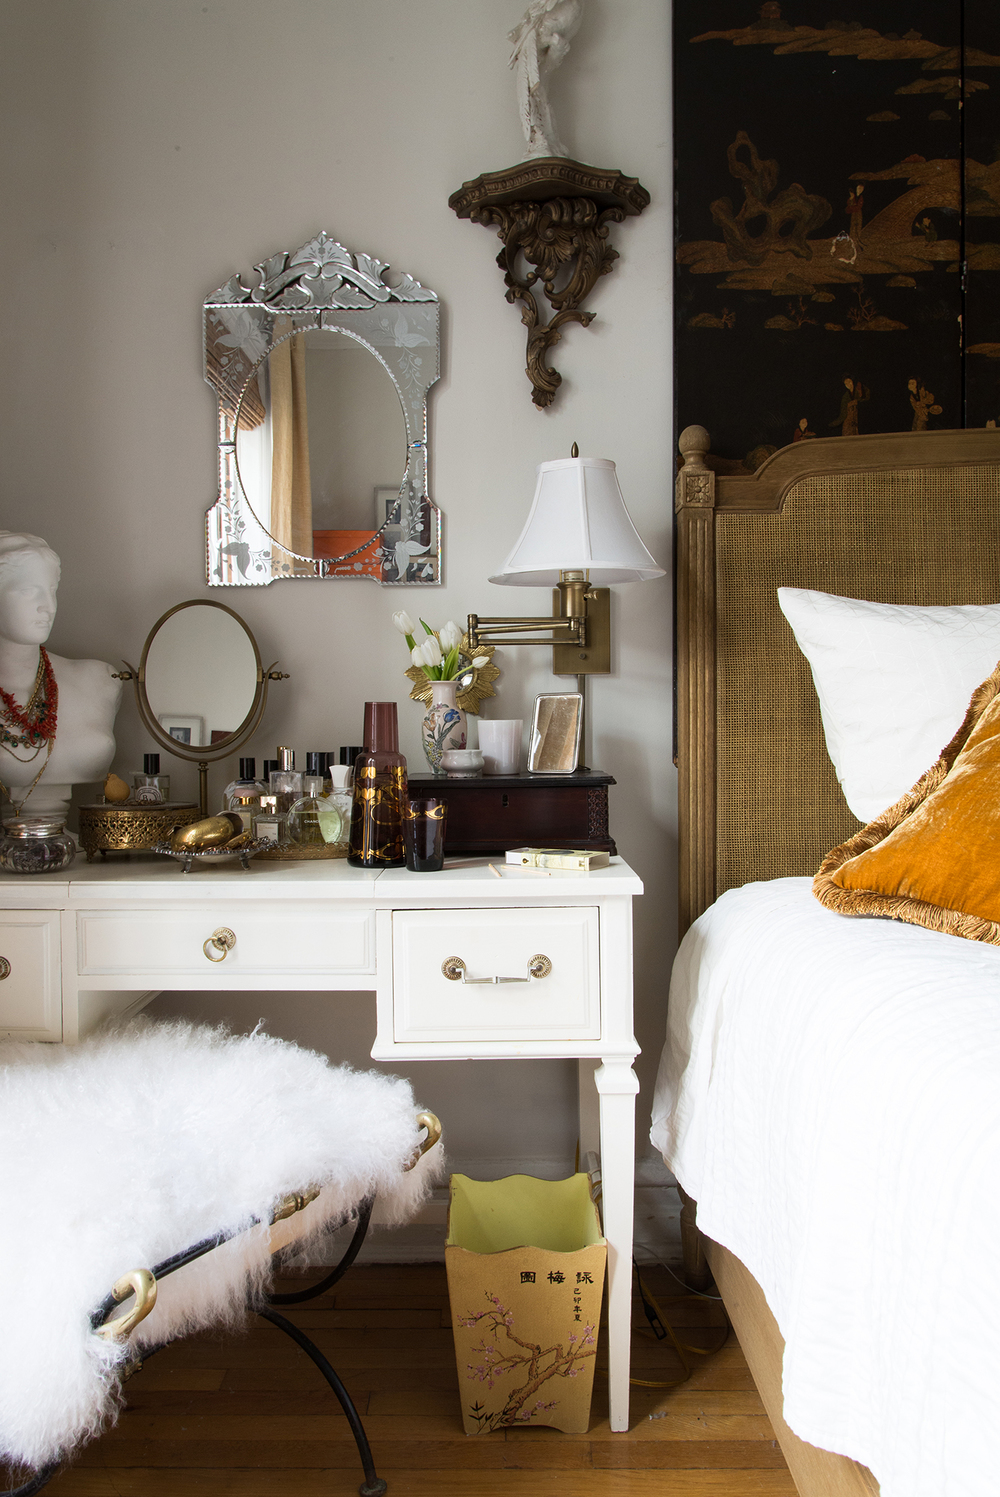 Bedroom Sconces | Image: Claire Esparros of Homepolish